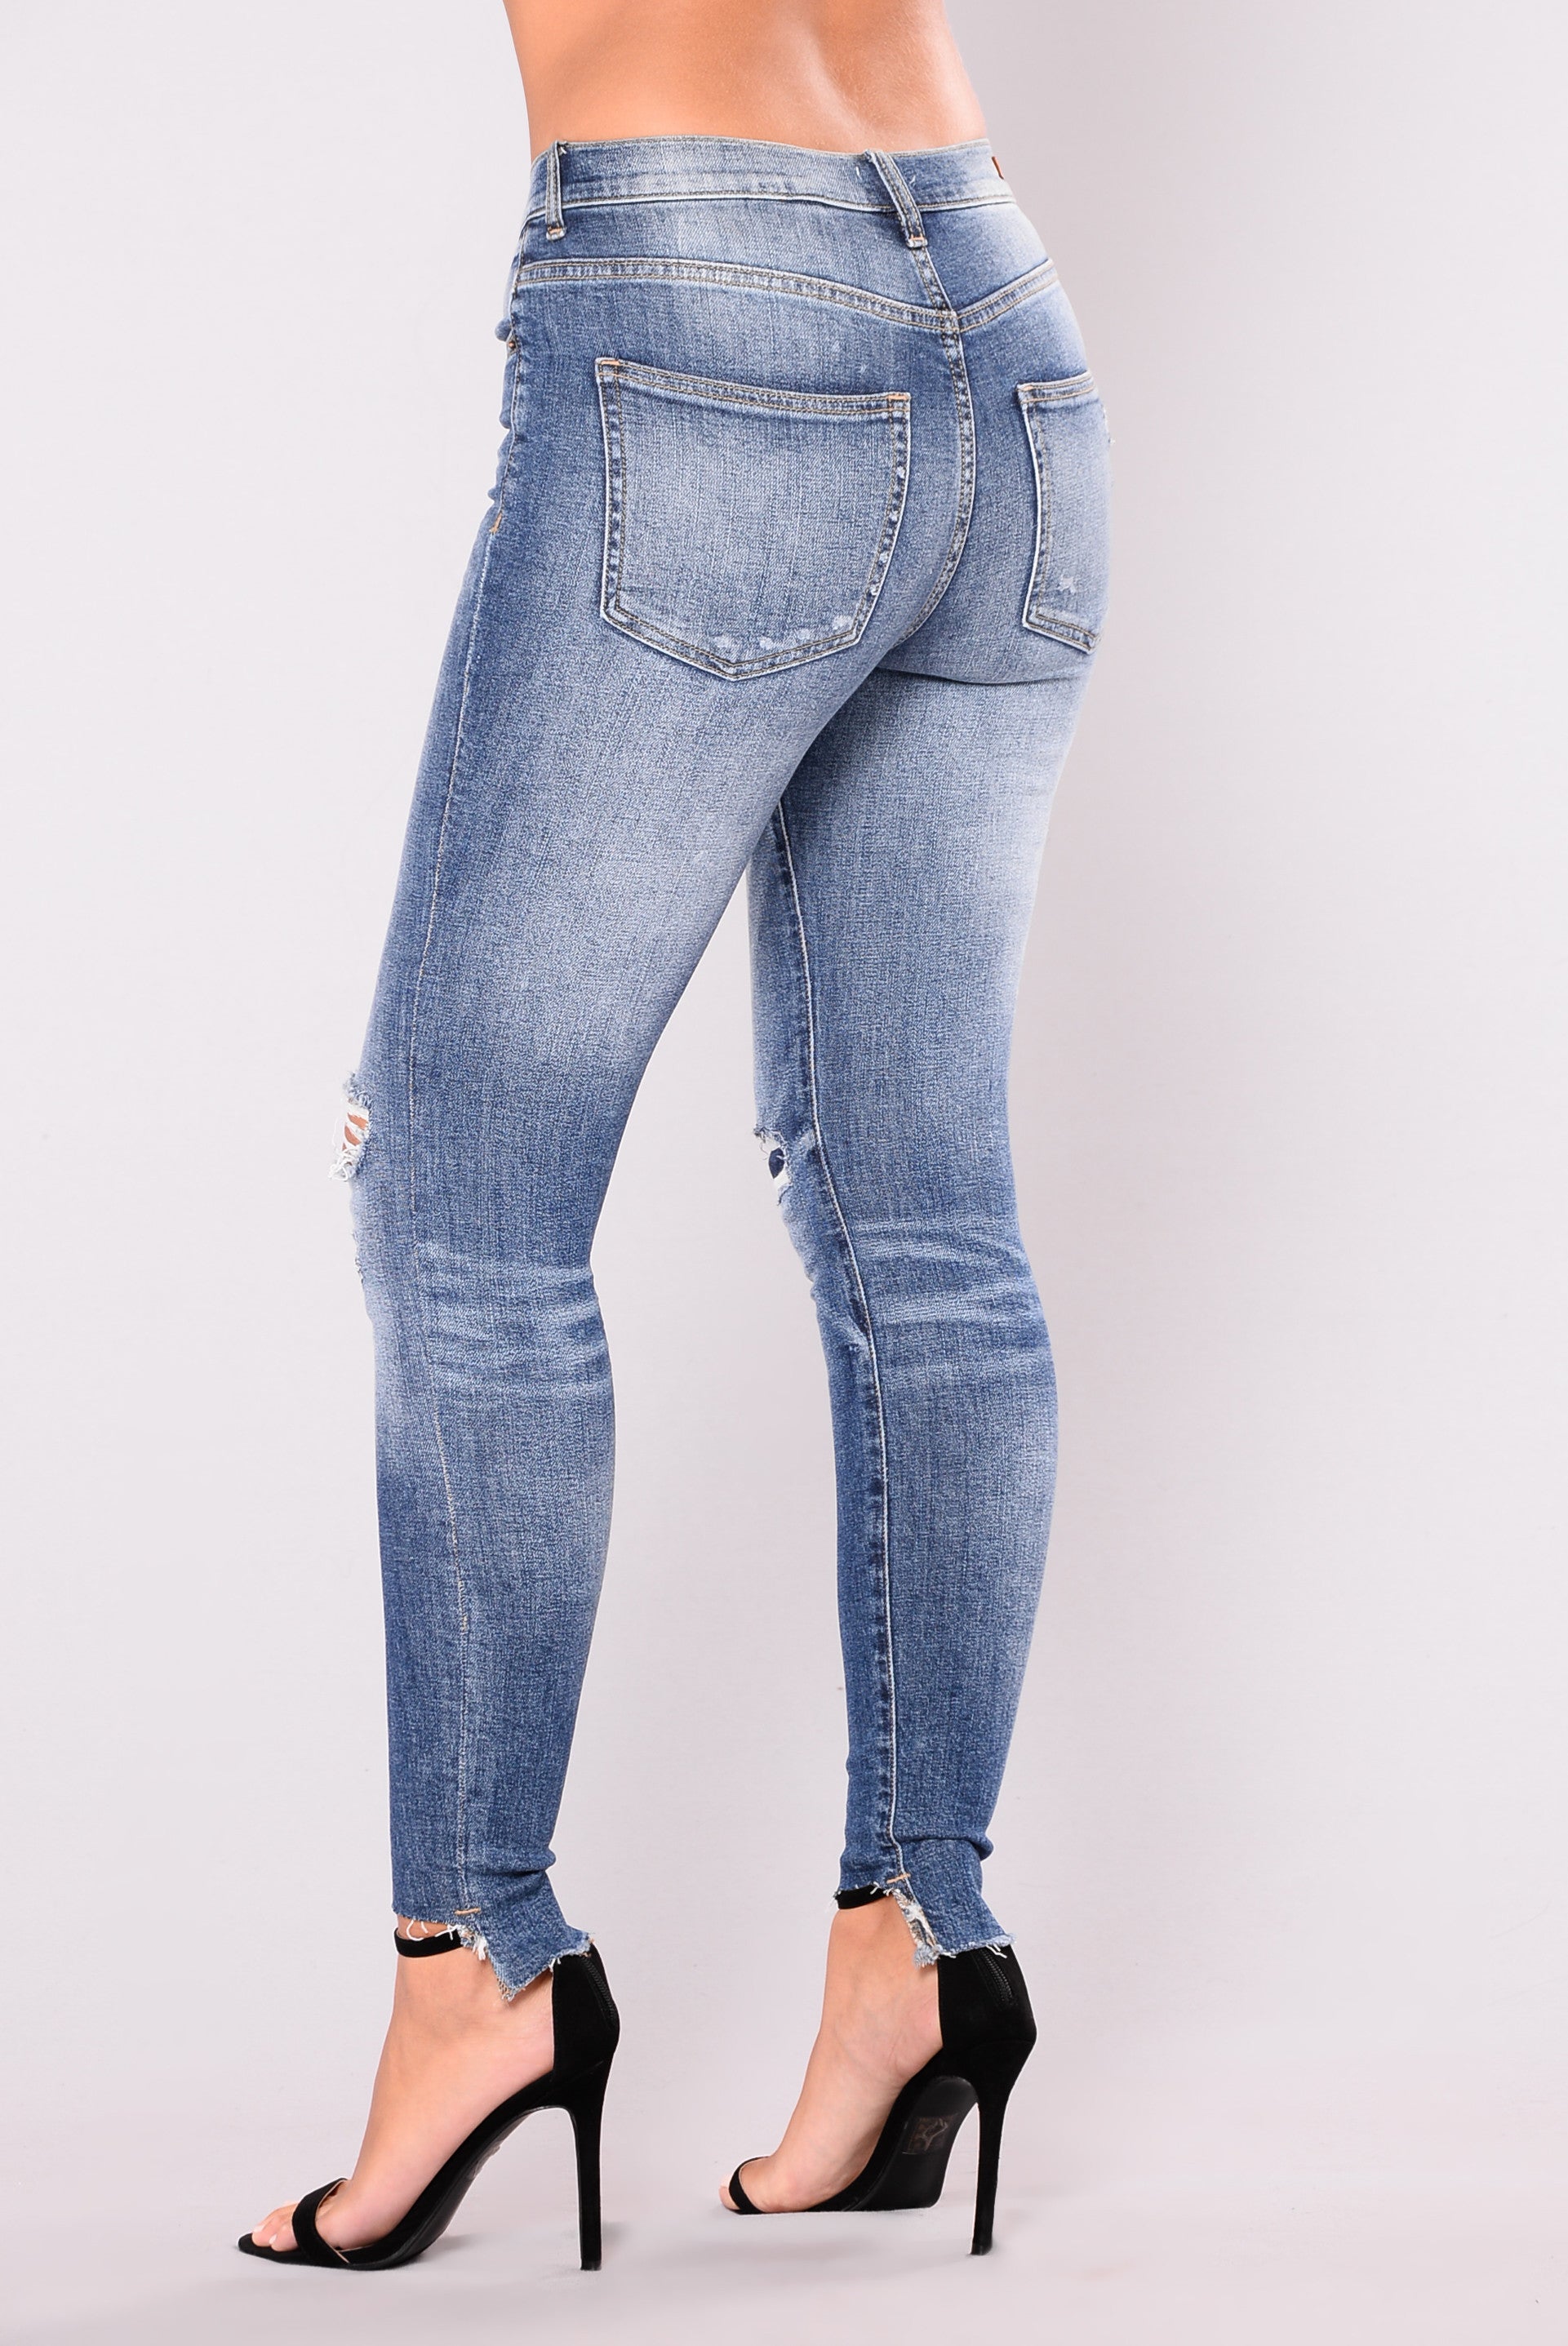 Ayla Distressed Jeans - Medium